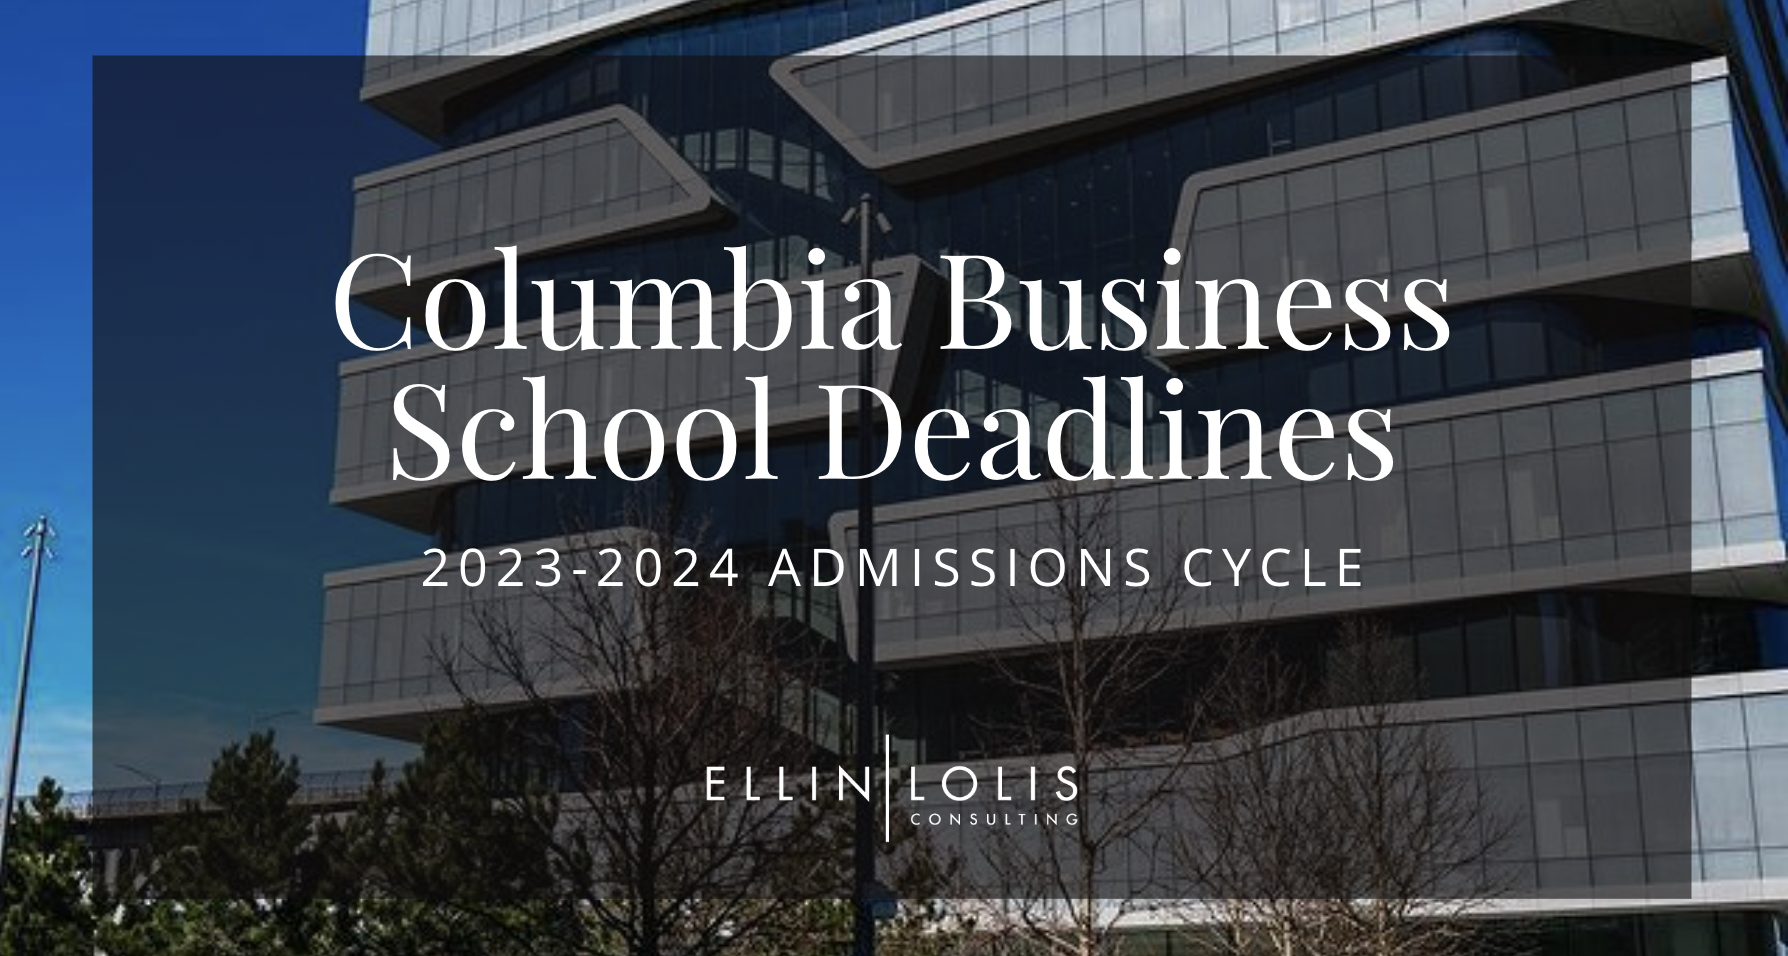 Columbia Business School MBA Deadlines for 2023-2024